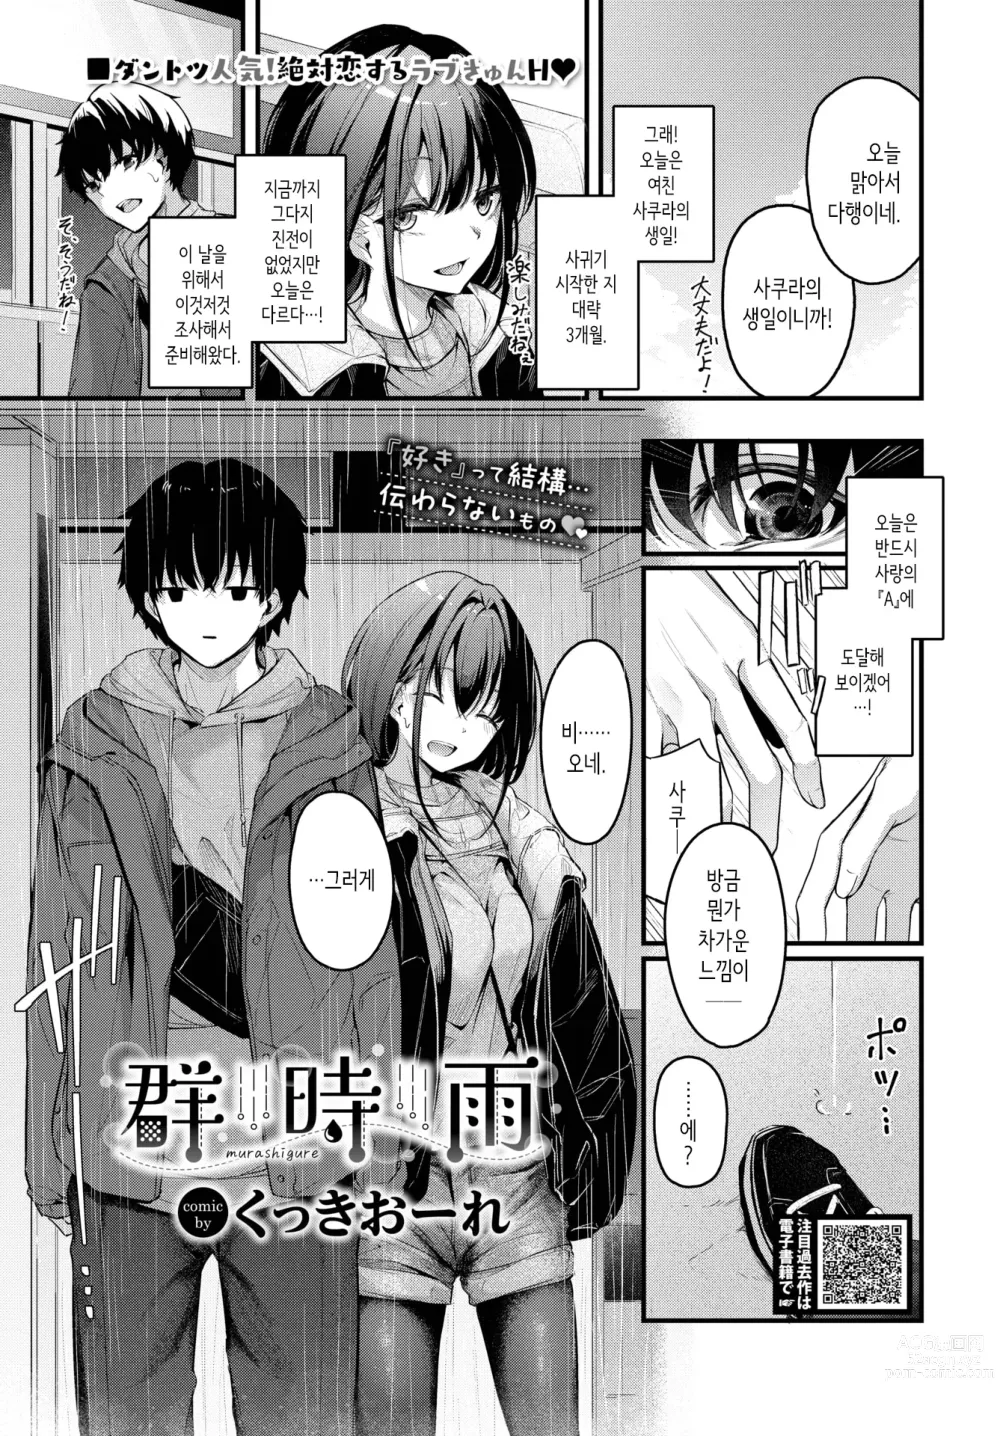 Page 1 of manga Murashigure